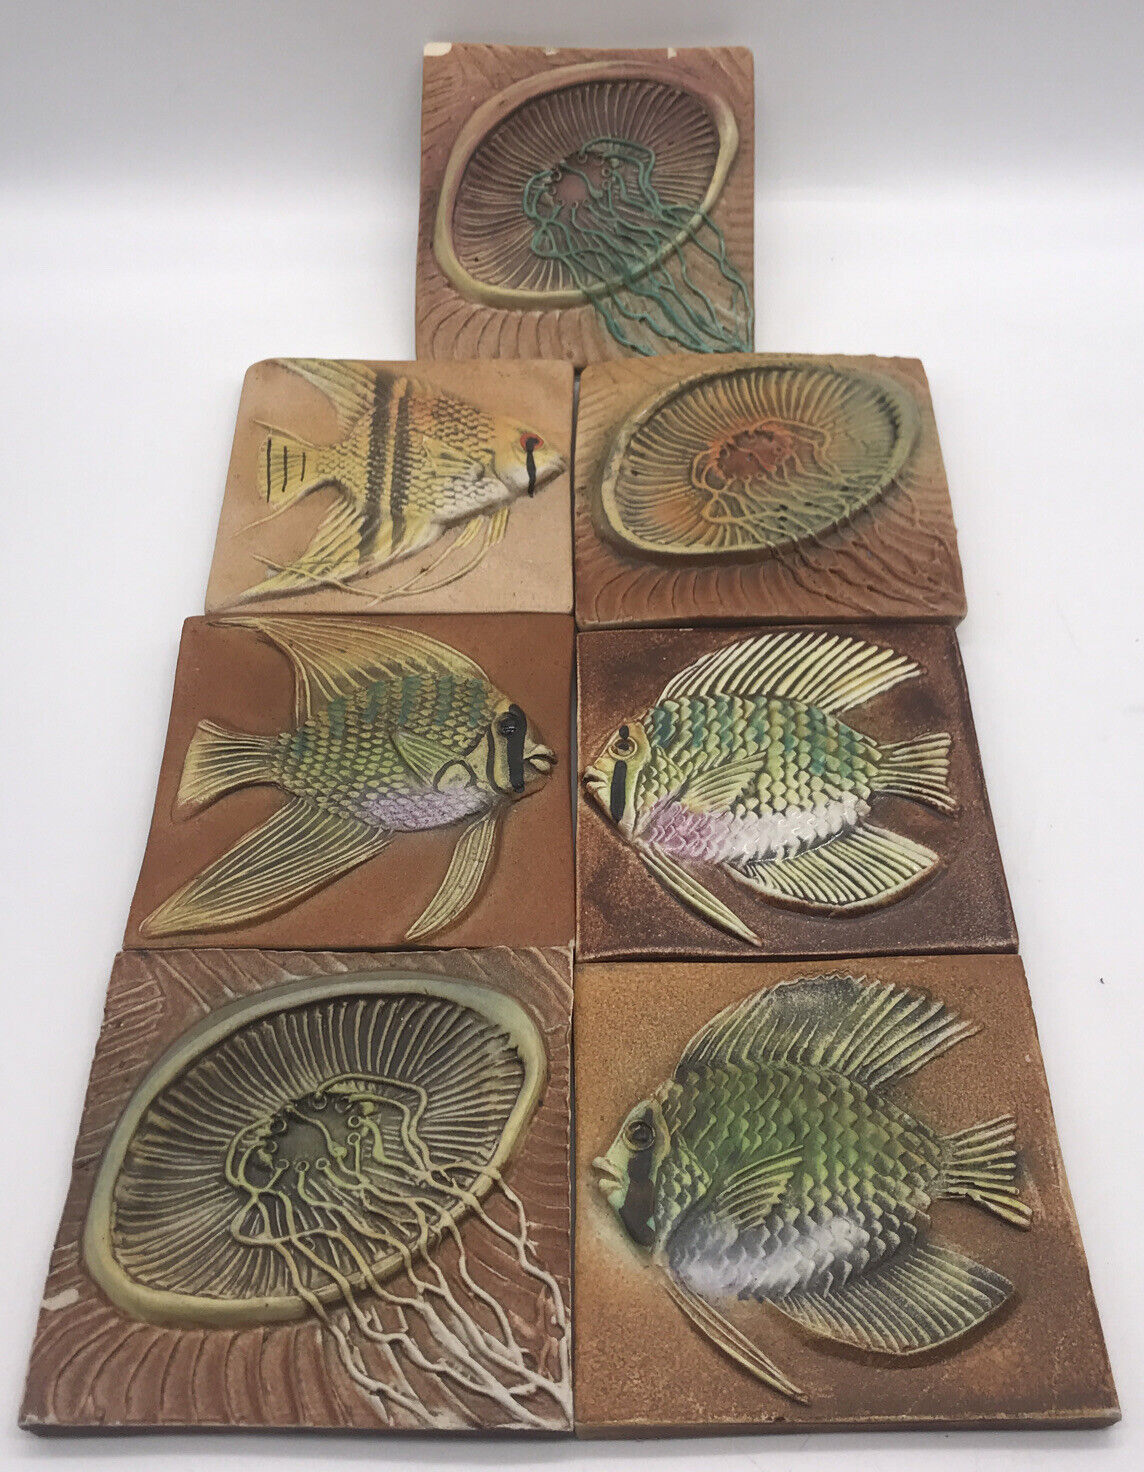 7 Rare 4” X 4” Fish/Jelly Fish ceramic tile Natalie Surving Studio 1996